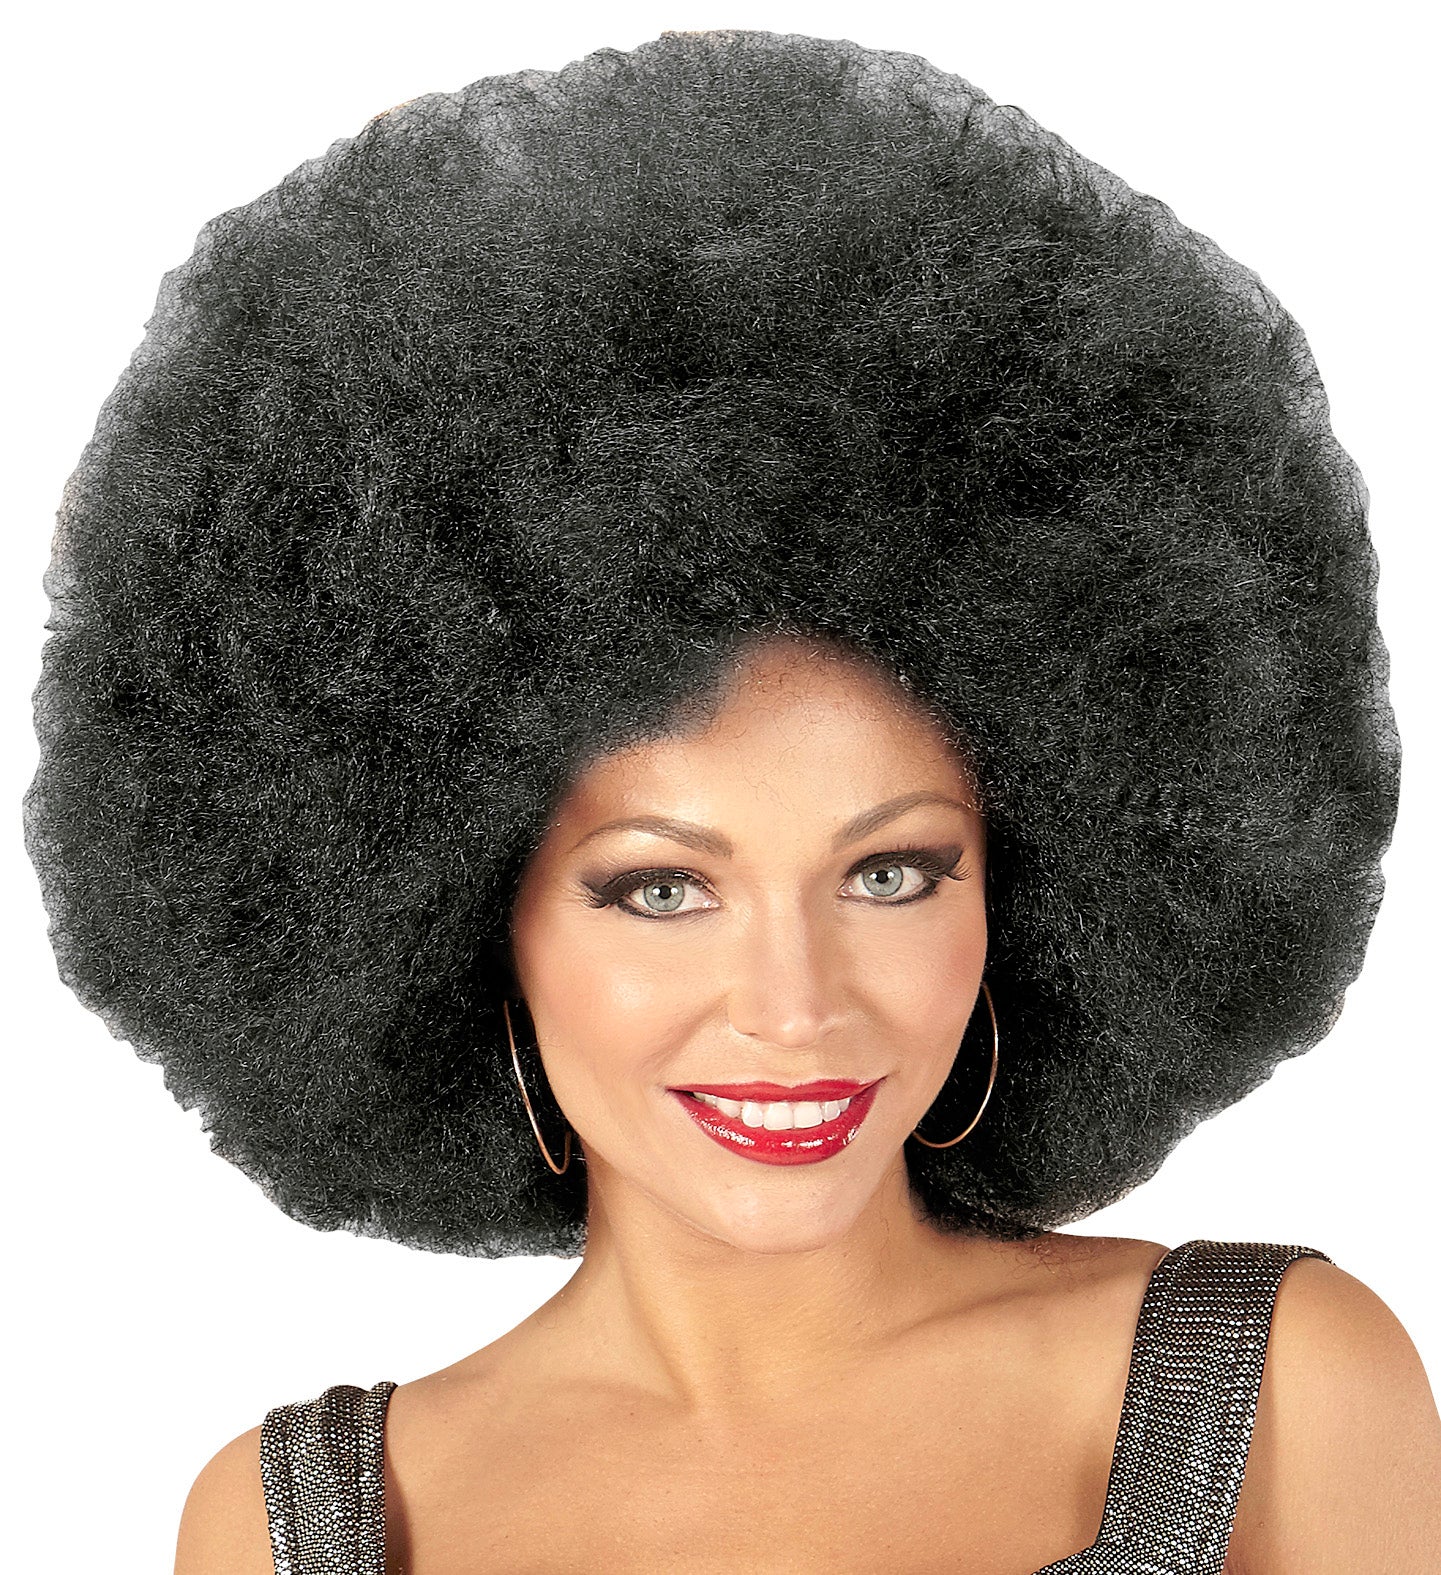 Oversized Black Afro Wig for women